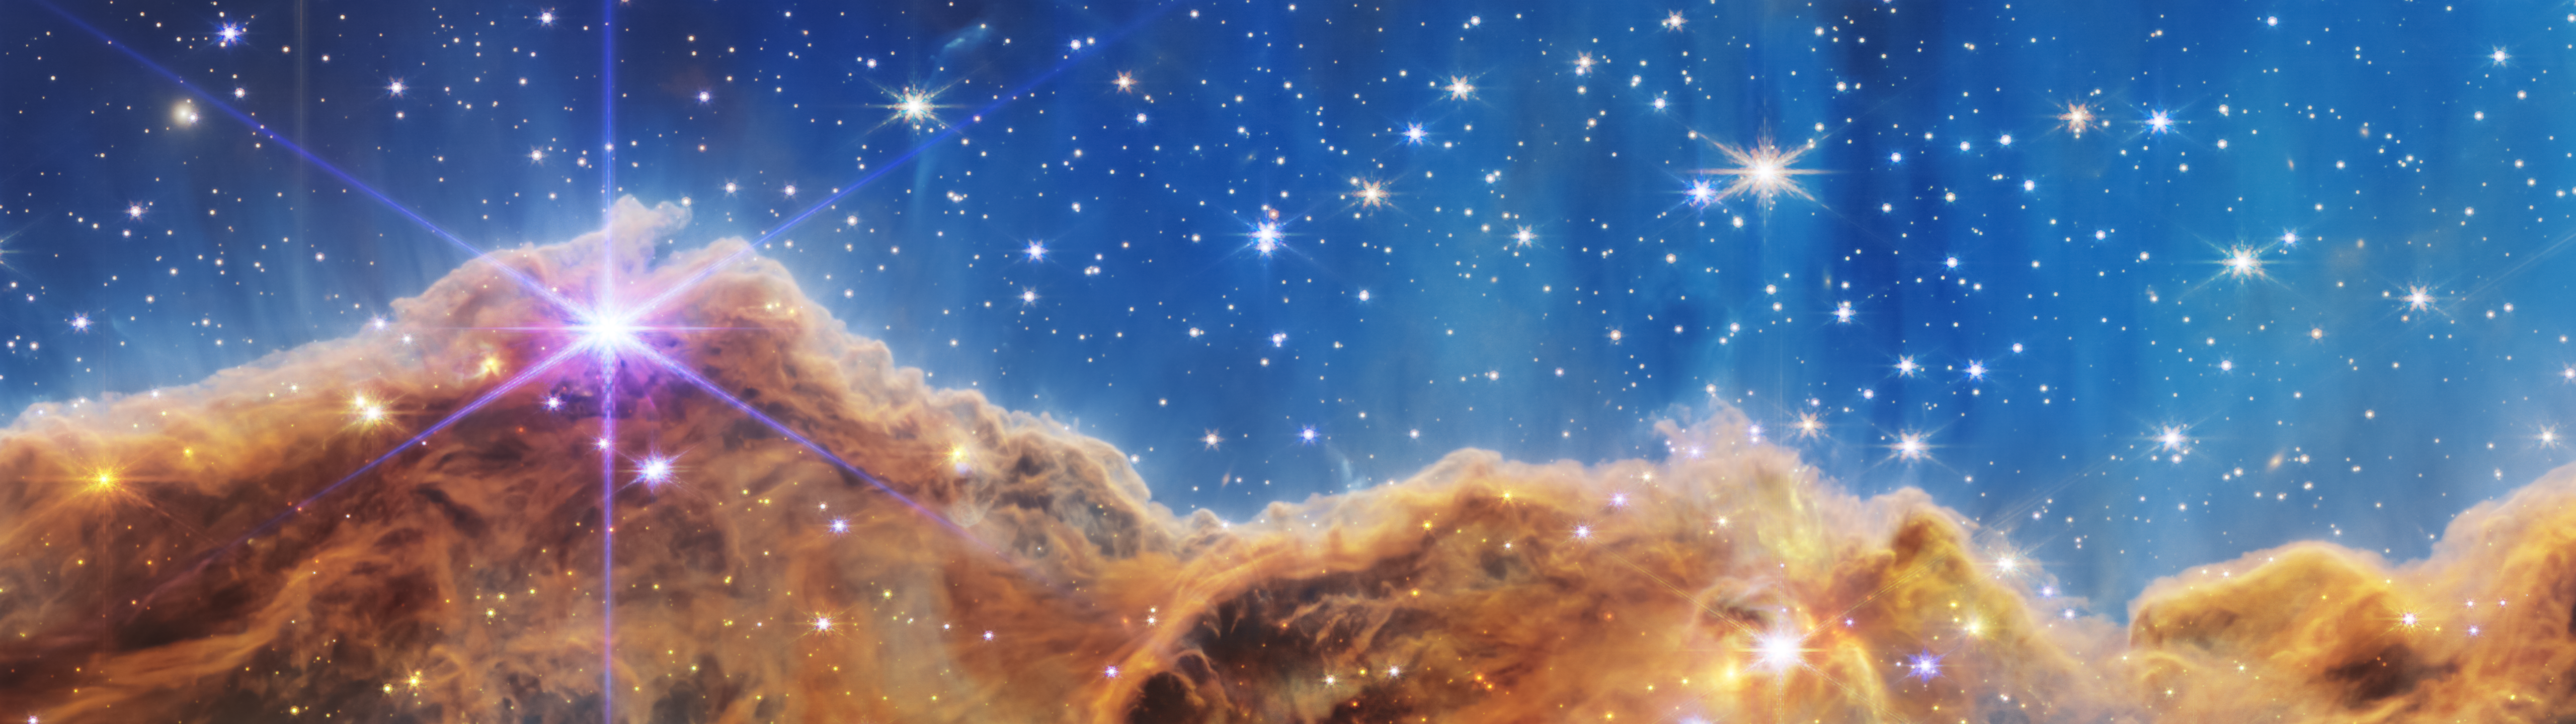 20 Carina Nebula HD Wallpapers and Backgrounds